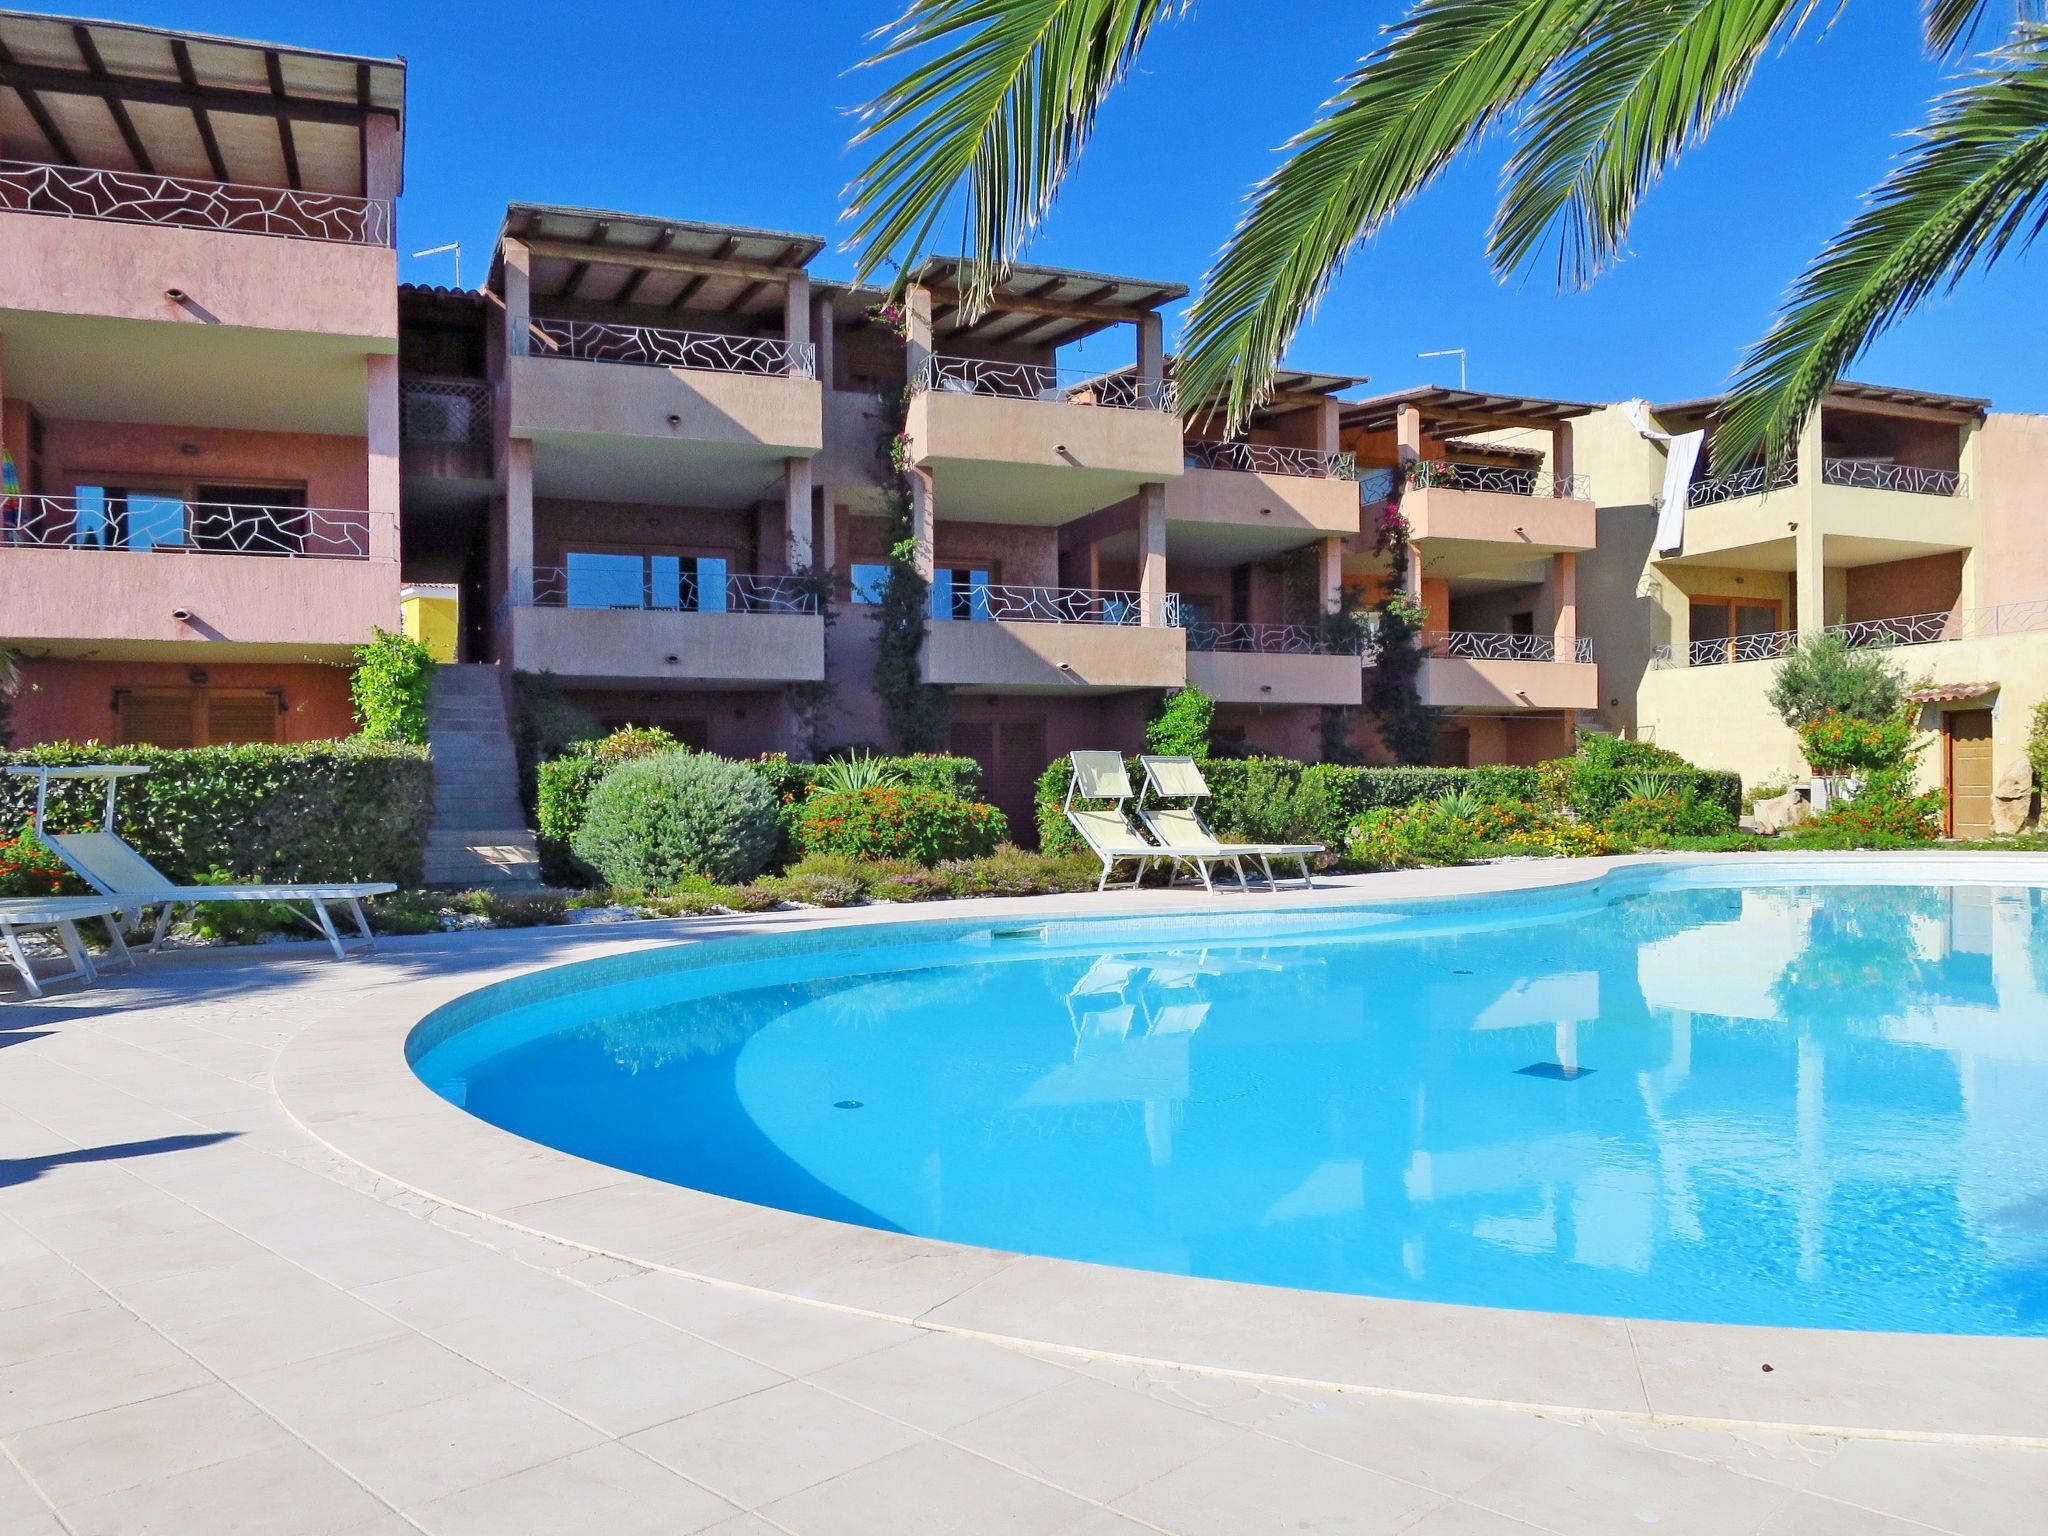 Photo 1 - Appartement de 2 chambres à Santa Teresa Gallura avec piscine et vues à la mer